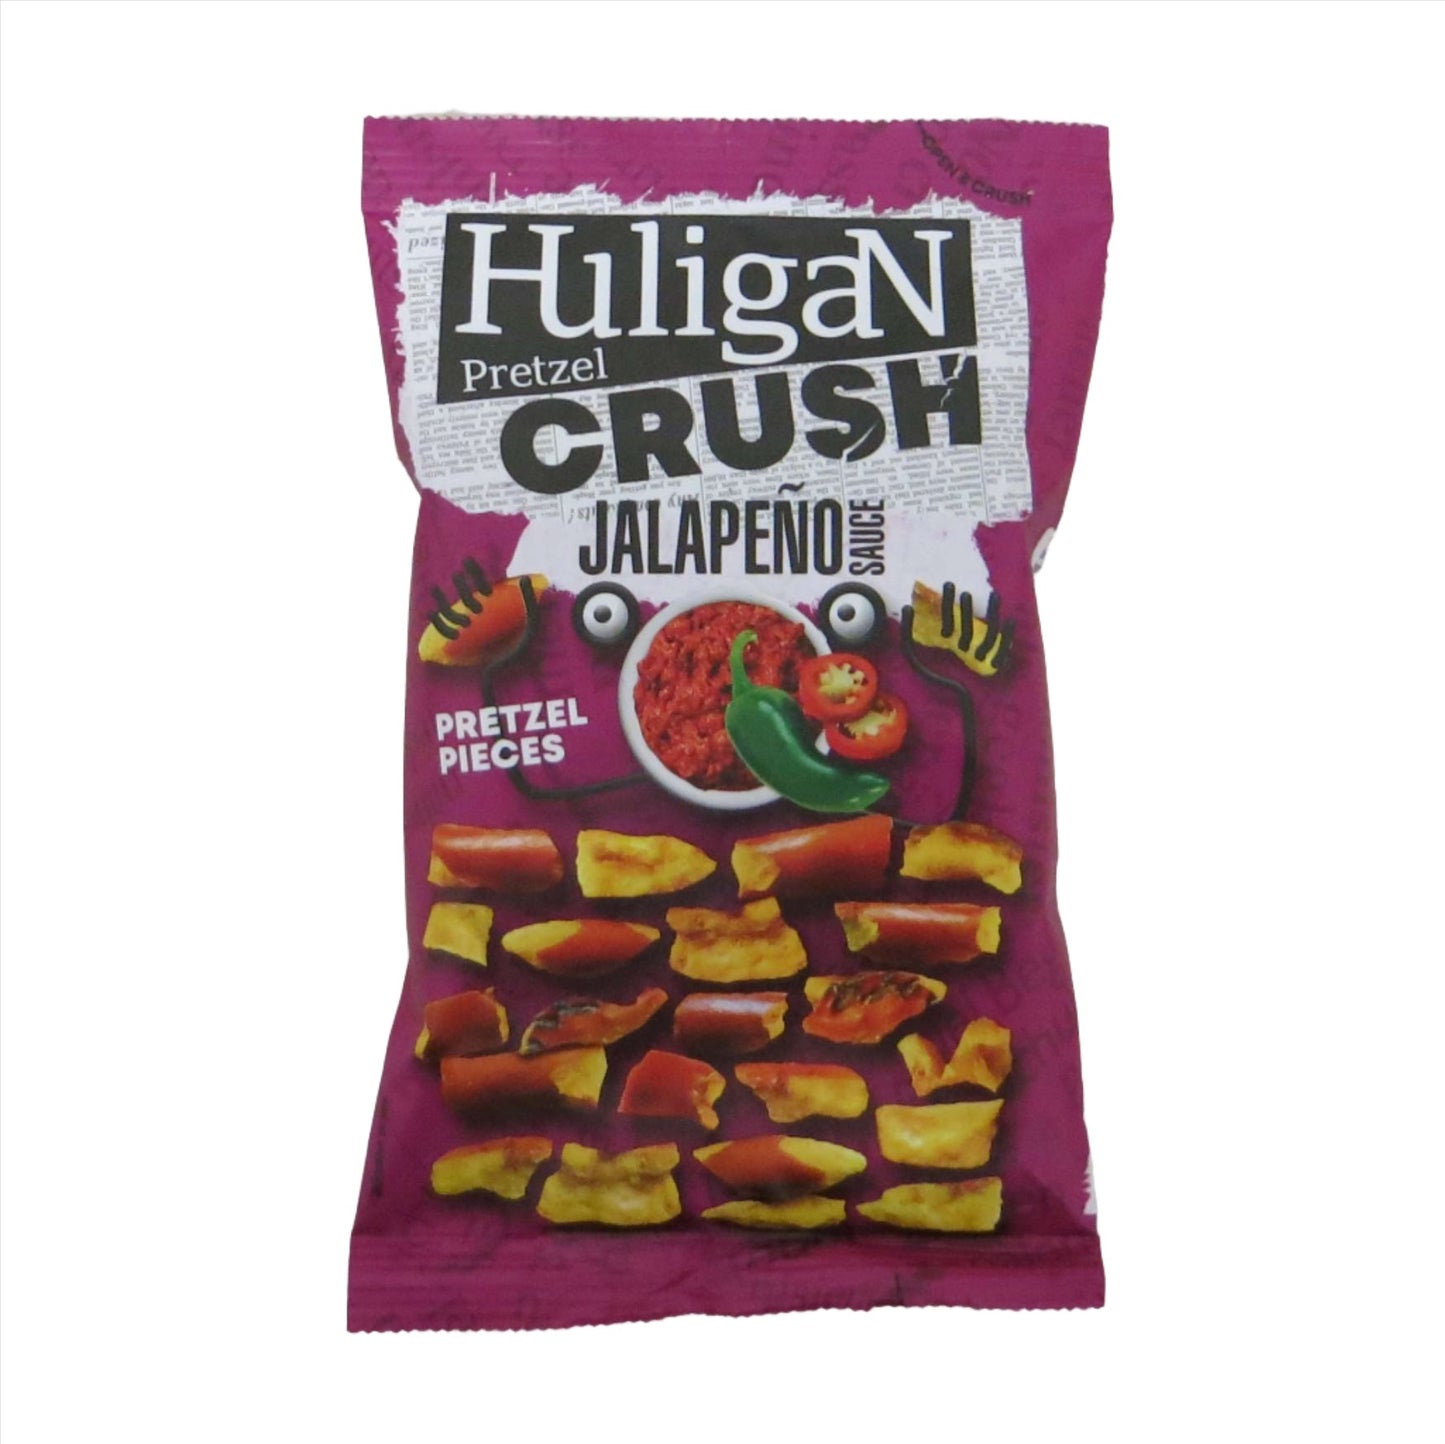 HuligaN Pretzel Crush Jalapeno 65g (UK) - Worldster Markt e.K.